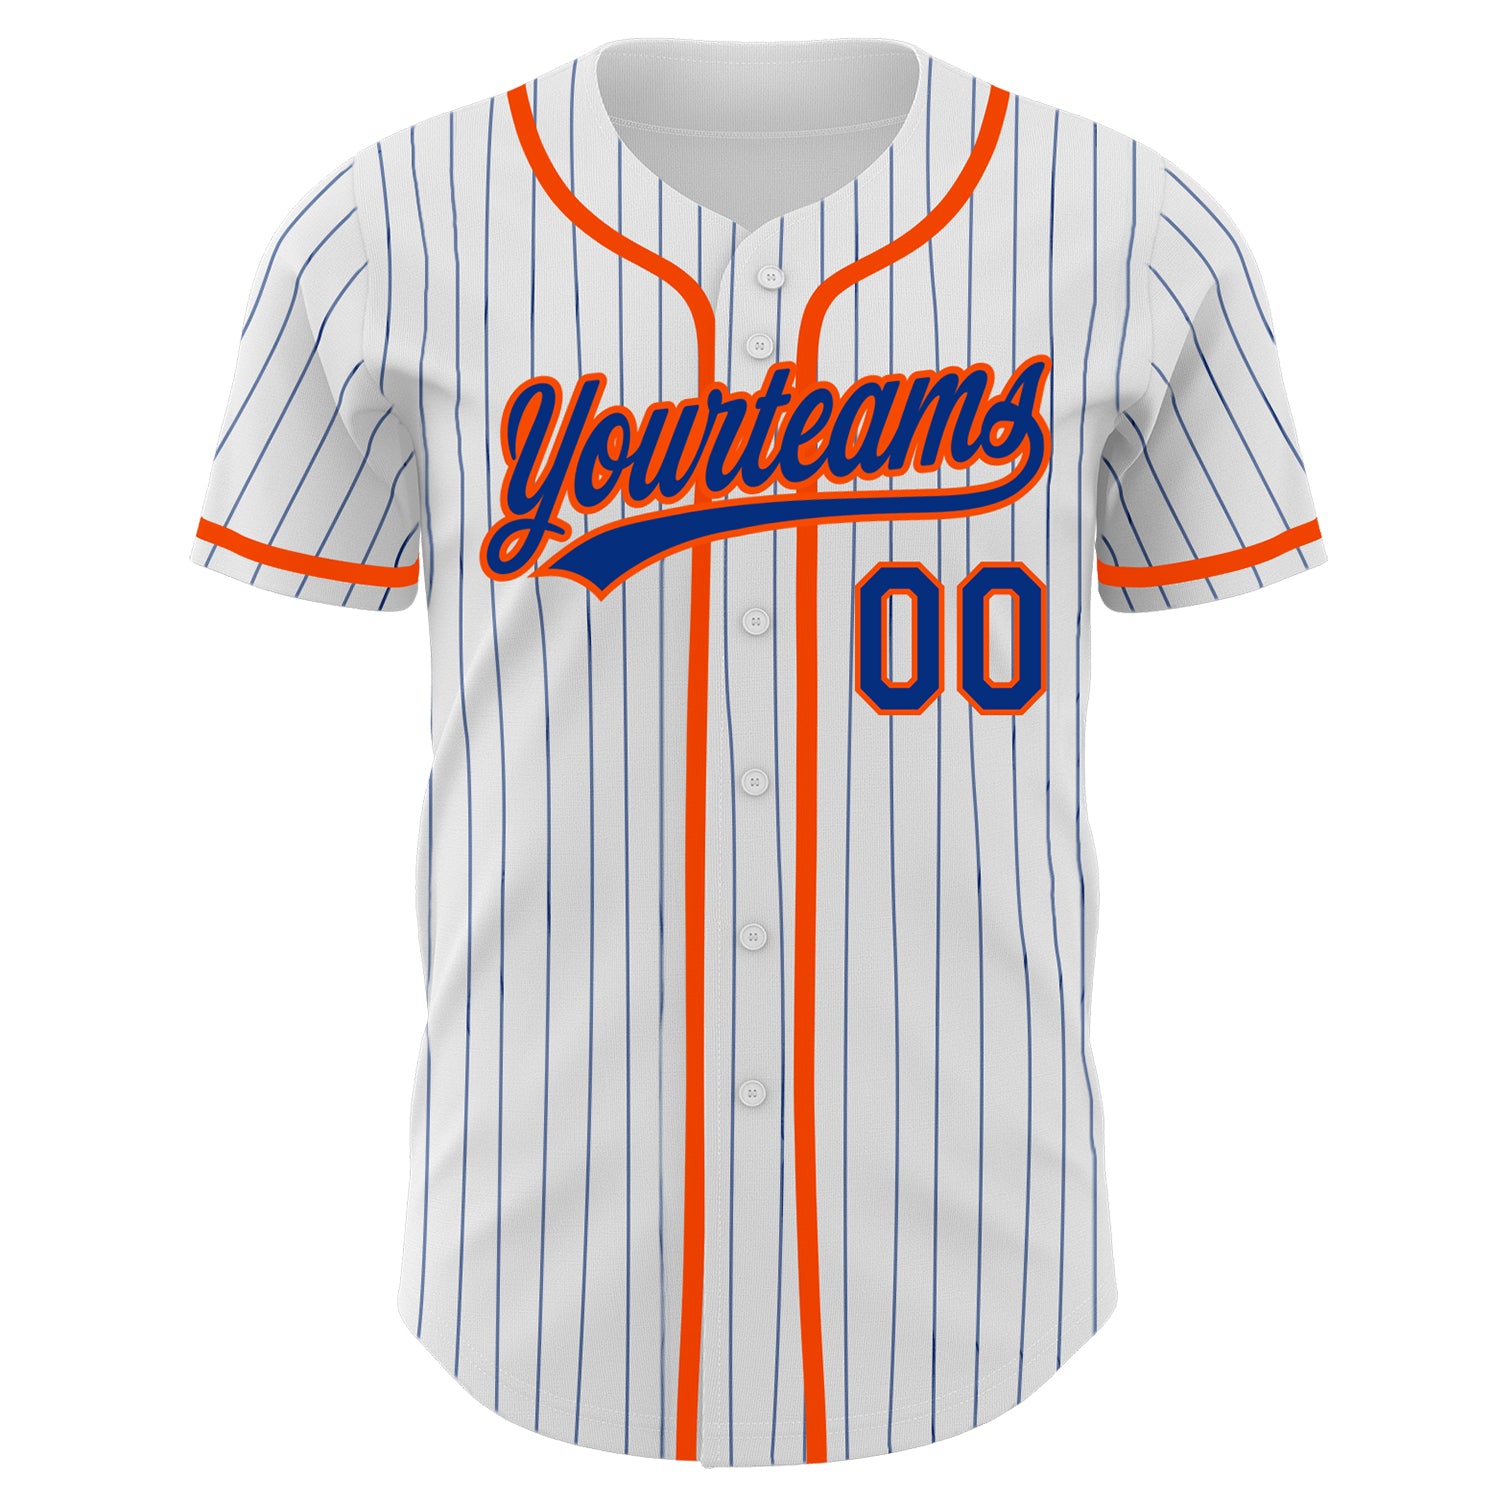 Custom-White-Royal-Pinstripe-Royal-Orange-Baseball-MLB-Jersey-2711